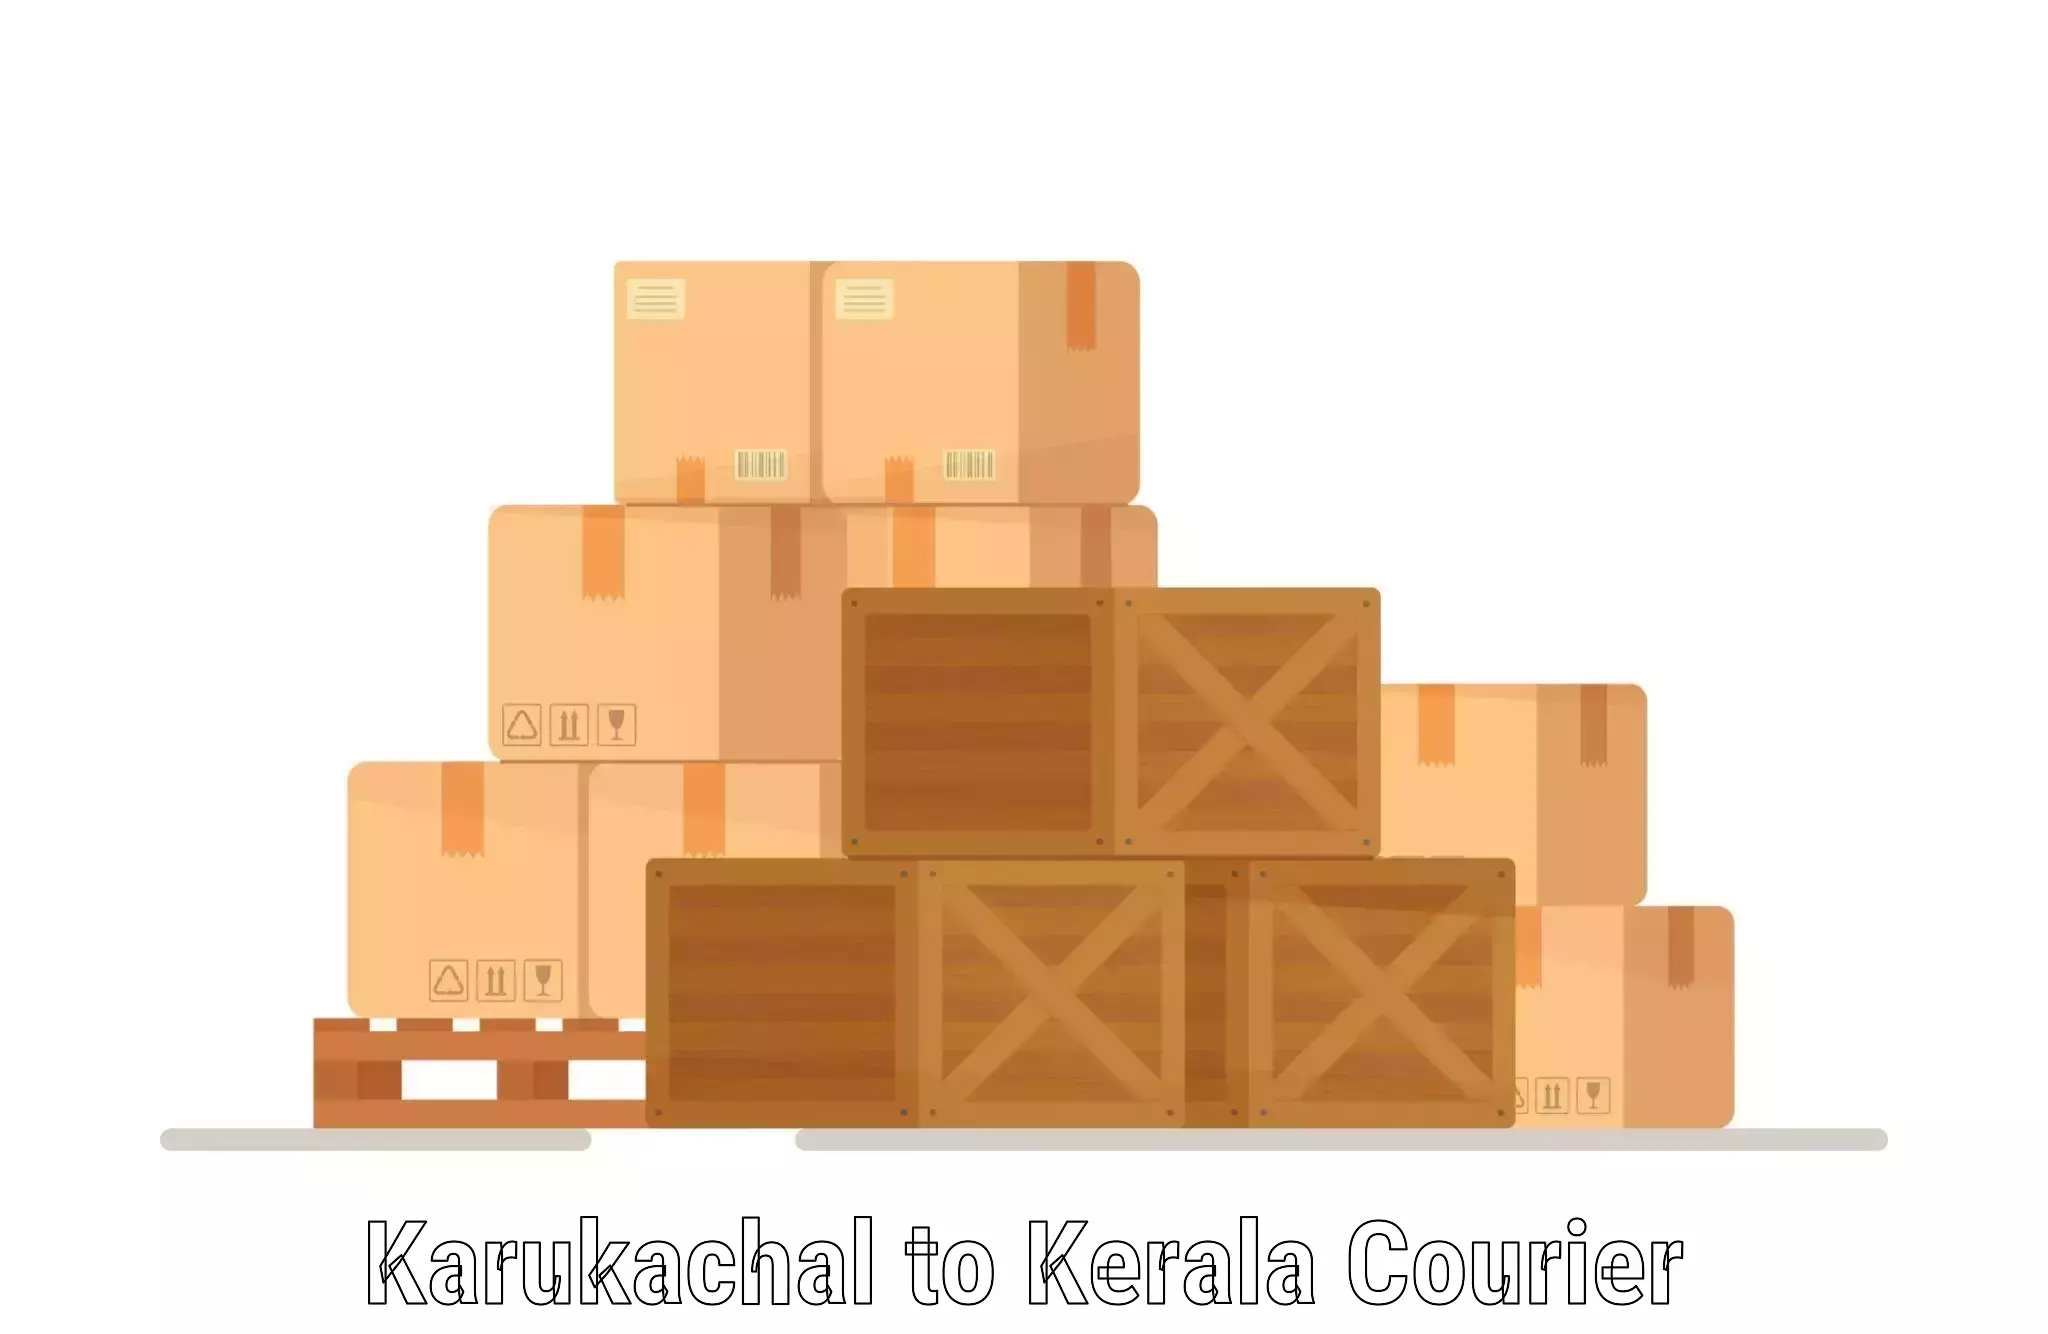 Global shipping networks Karukachal to Kalanjoor